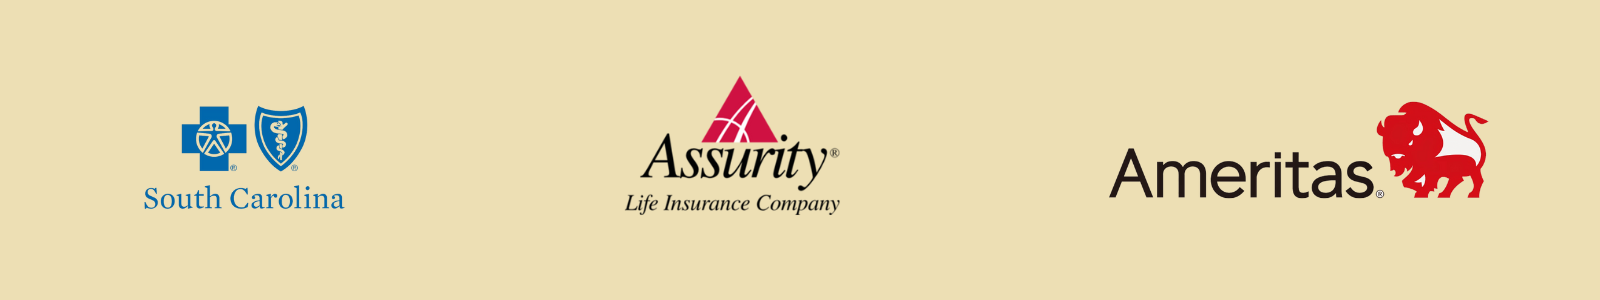 BCBS, Assurity, Ameritas Insurance Logos